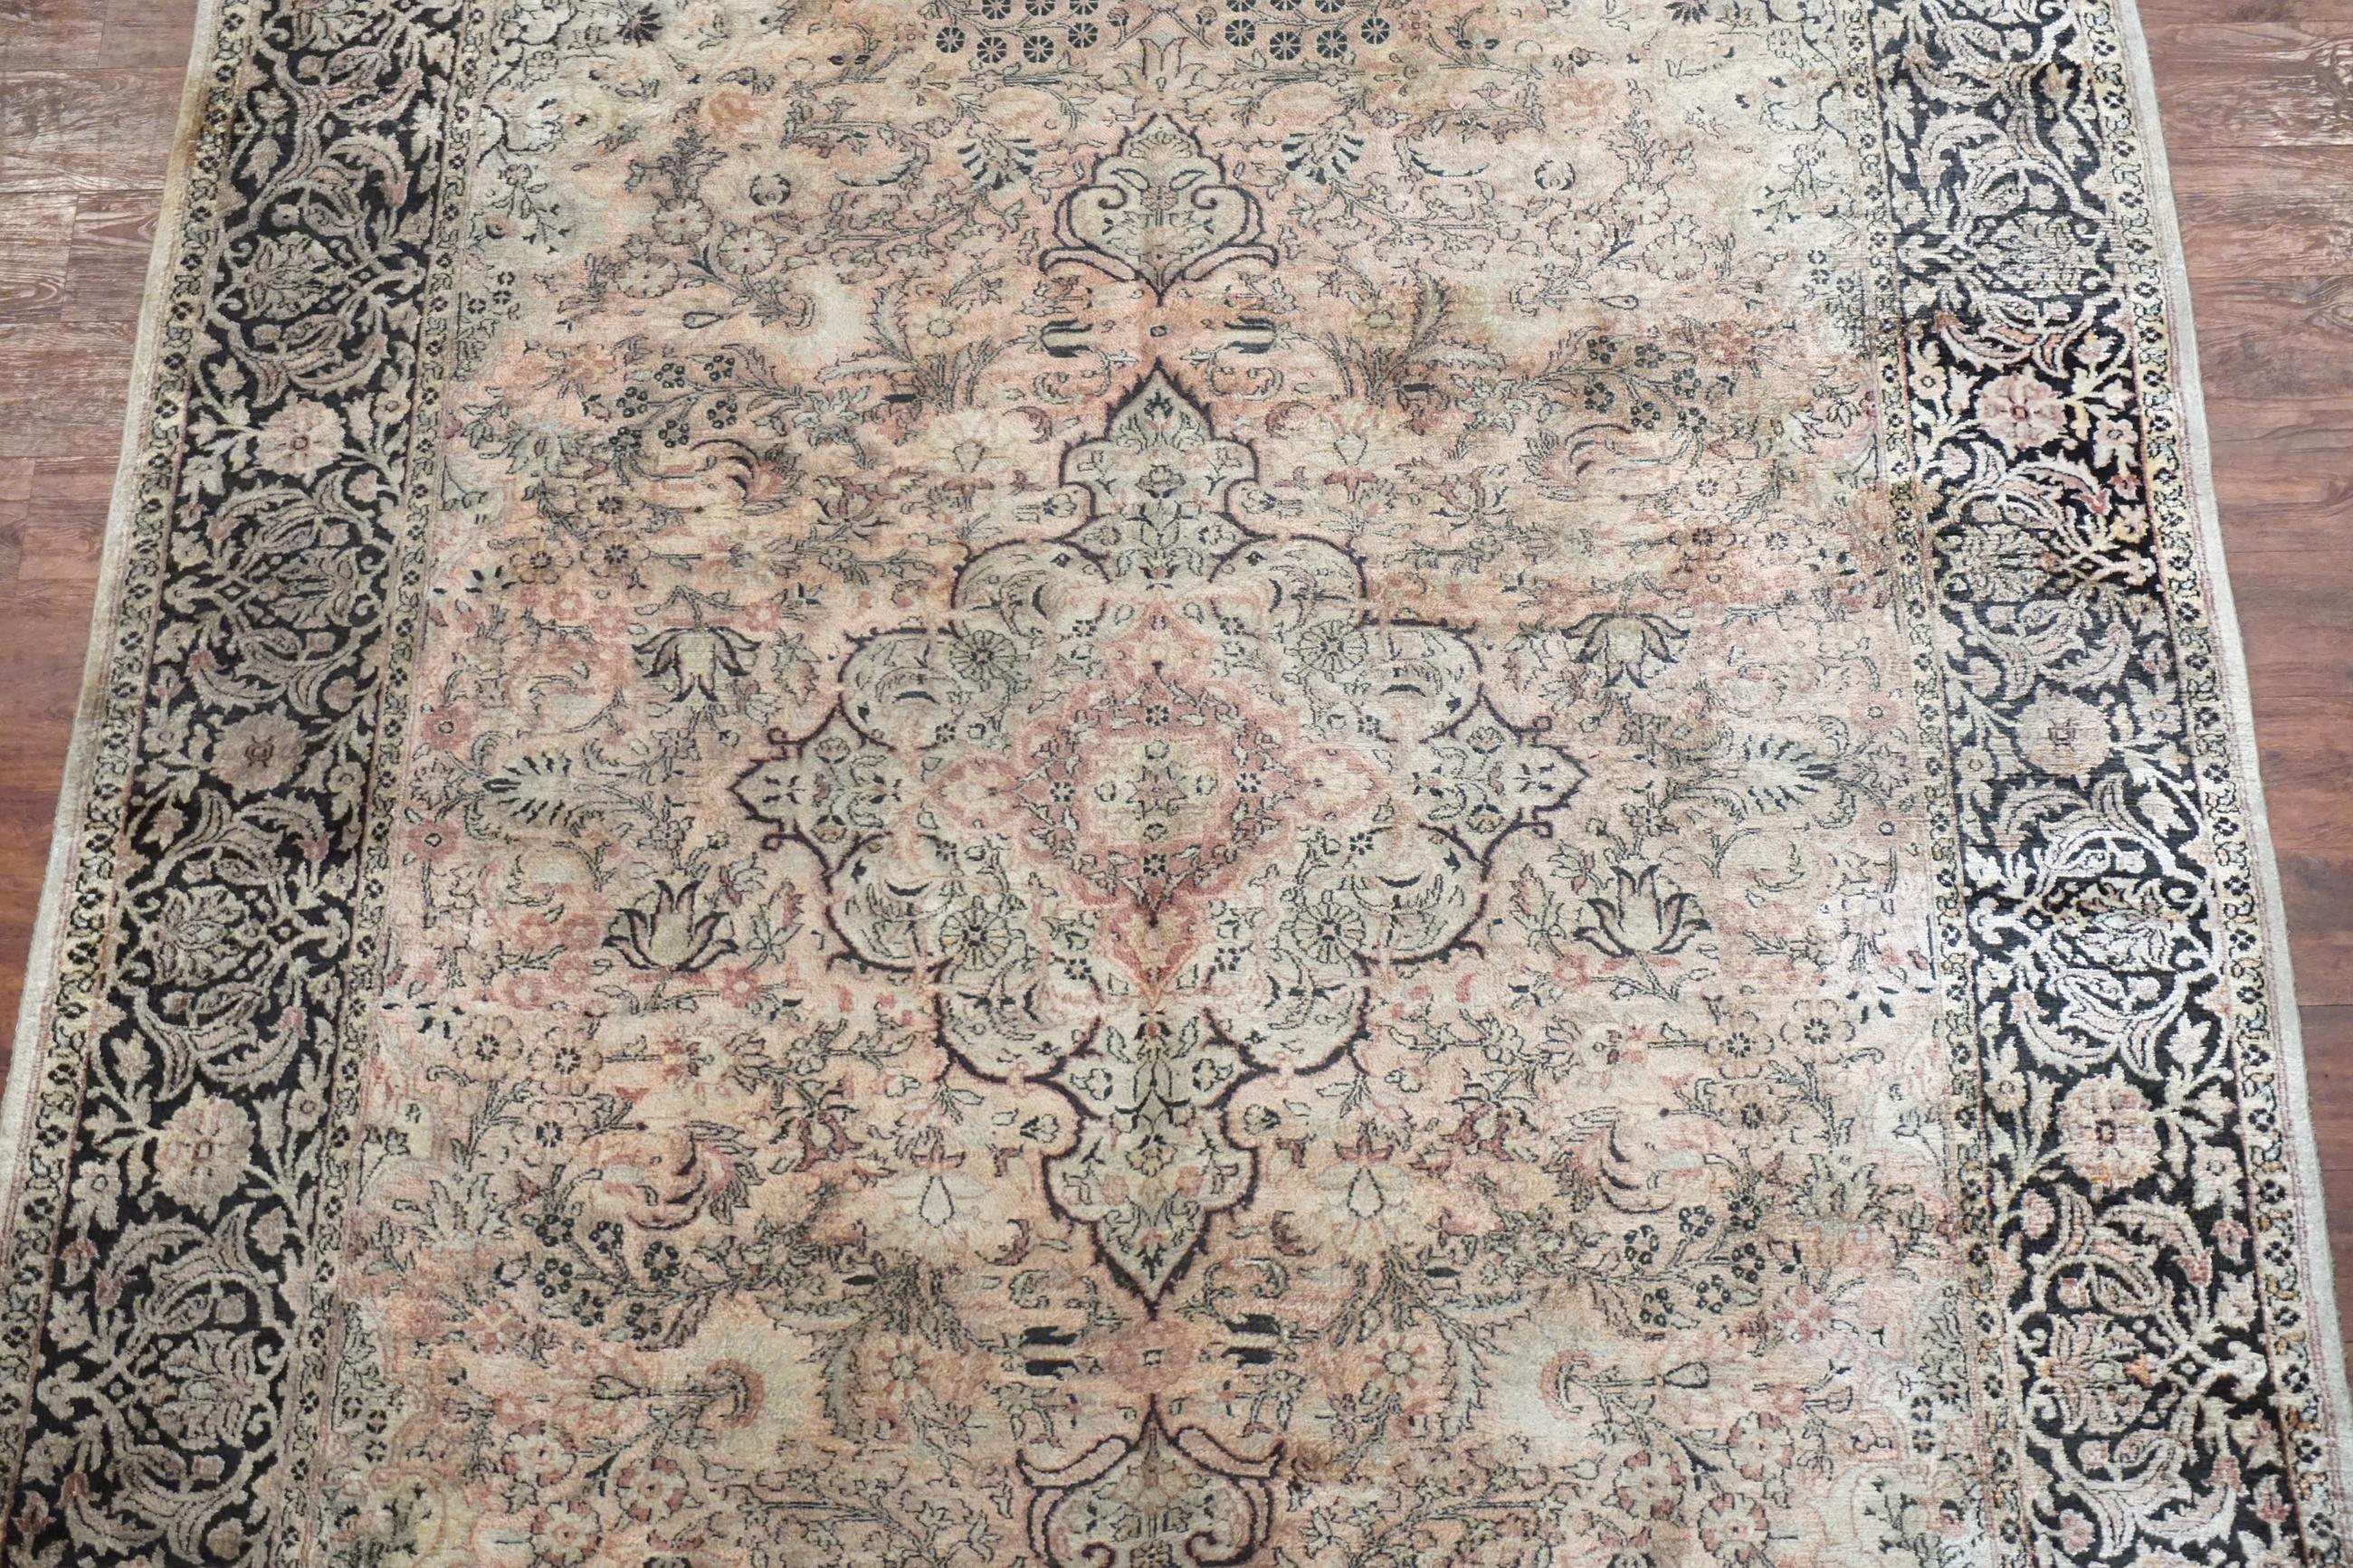 Vintage Silk Kashmir rug

Made in Kashmir,

circa 1970

Measures: 6' x 9' 1